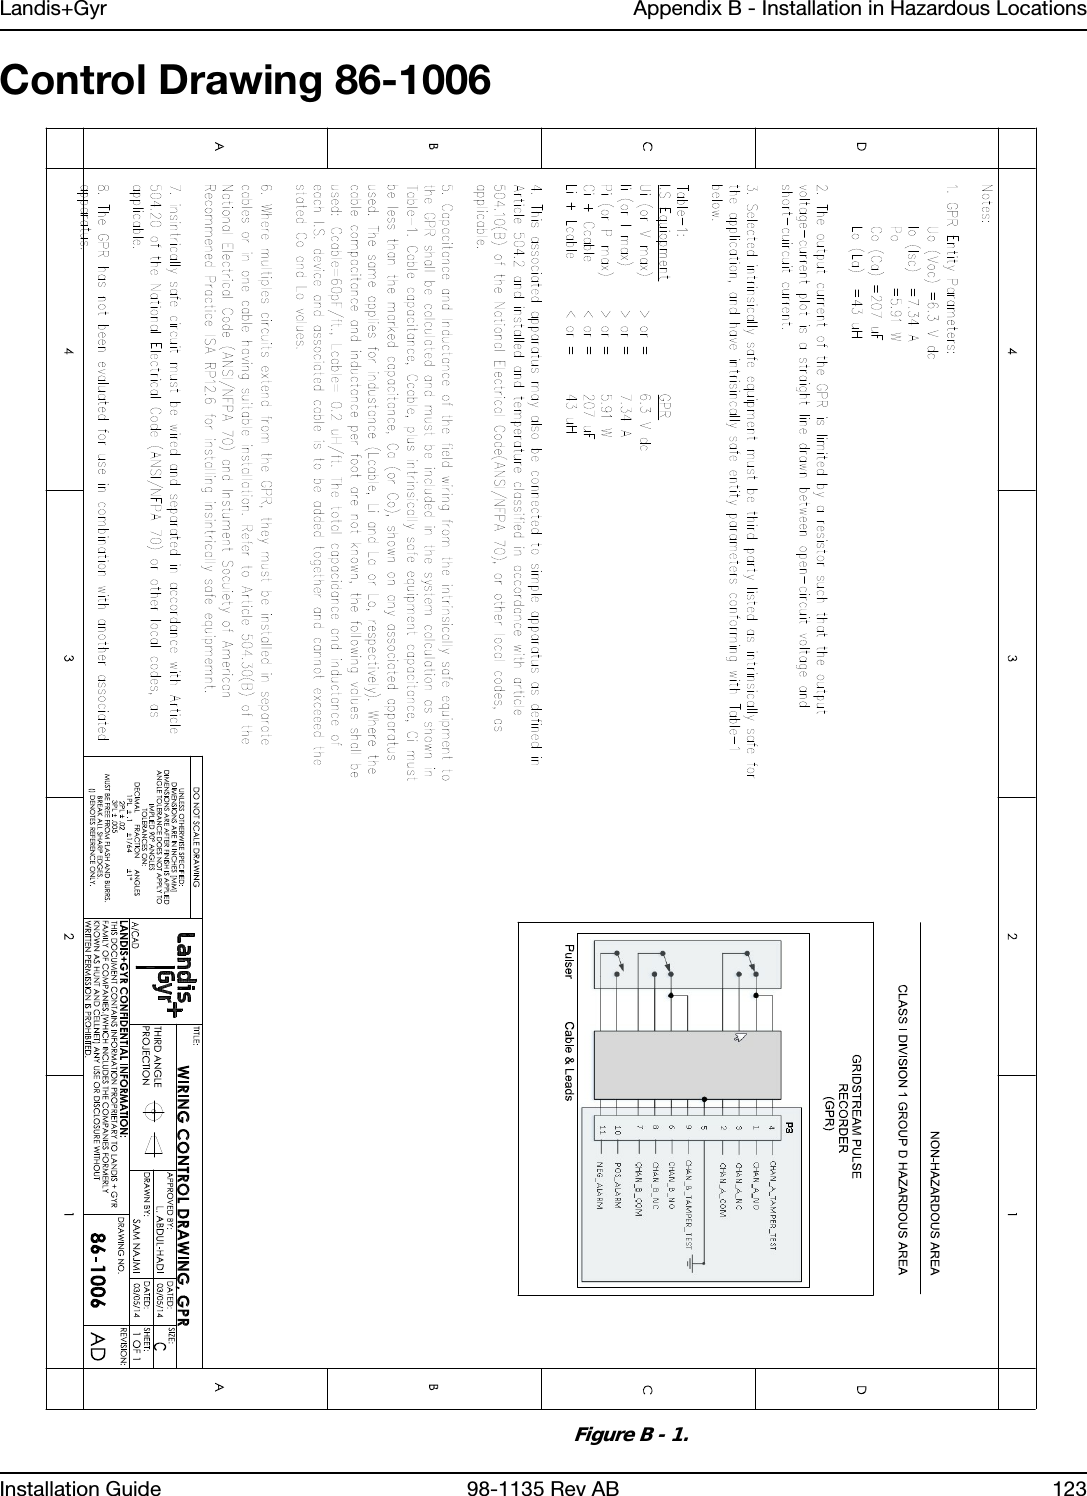 Landis+Gyr Appendix B - Installation in Hazardous LocationsInstallation Guide 98-1135 Rev AB 123Control Drawing 86-1006 Figure B - 1. 